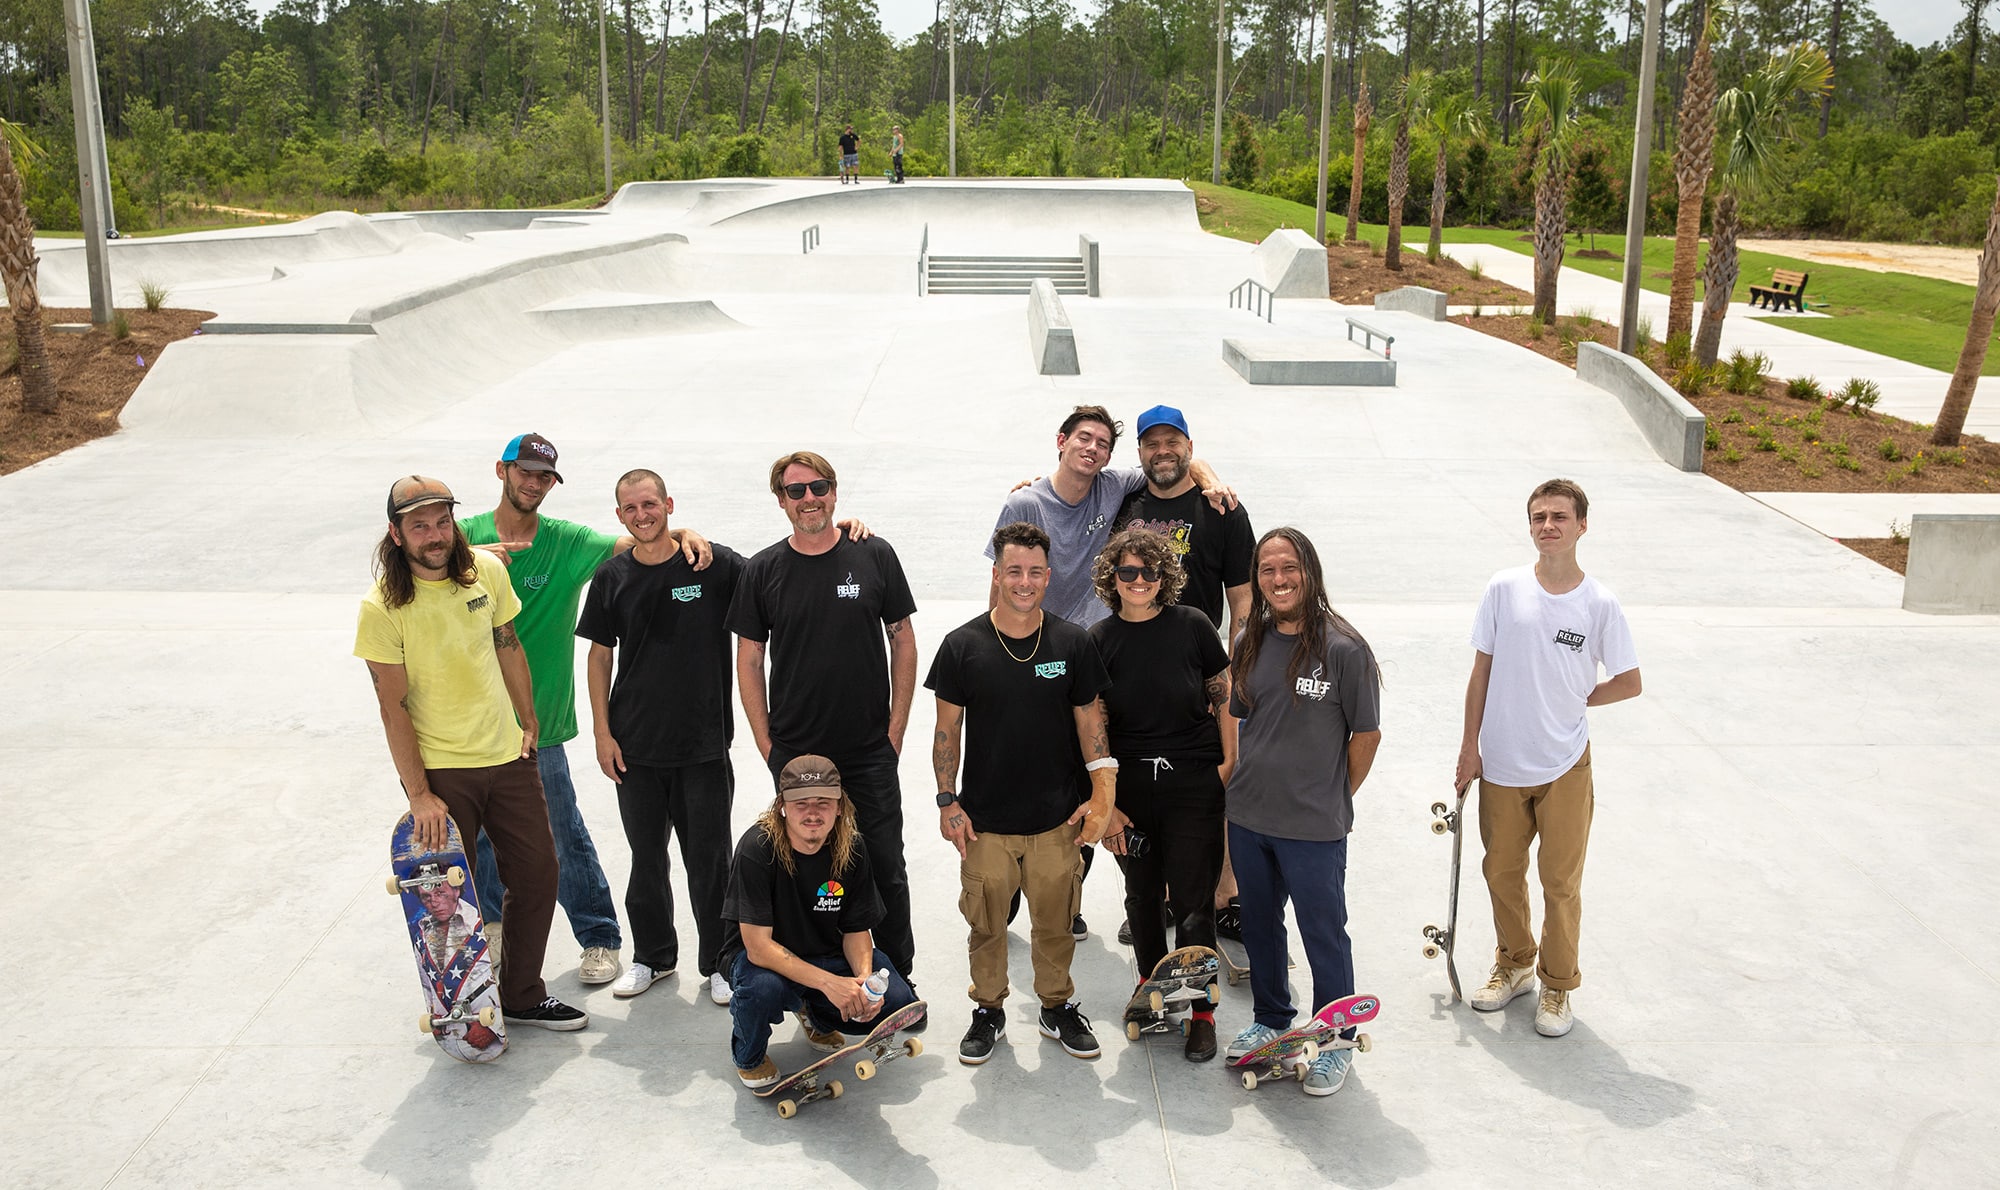 Relief Skatepark Team at the Bay County Skatepark photo shoot in Panama City, FL